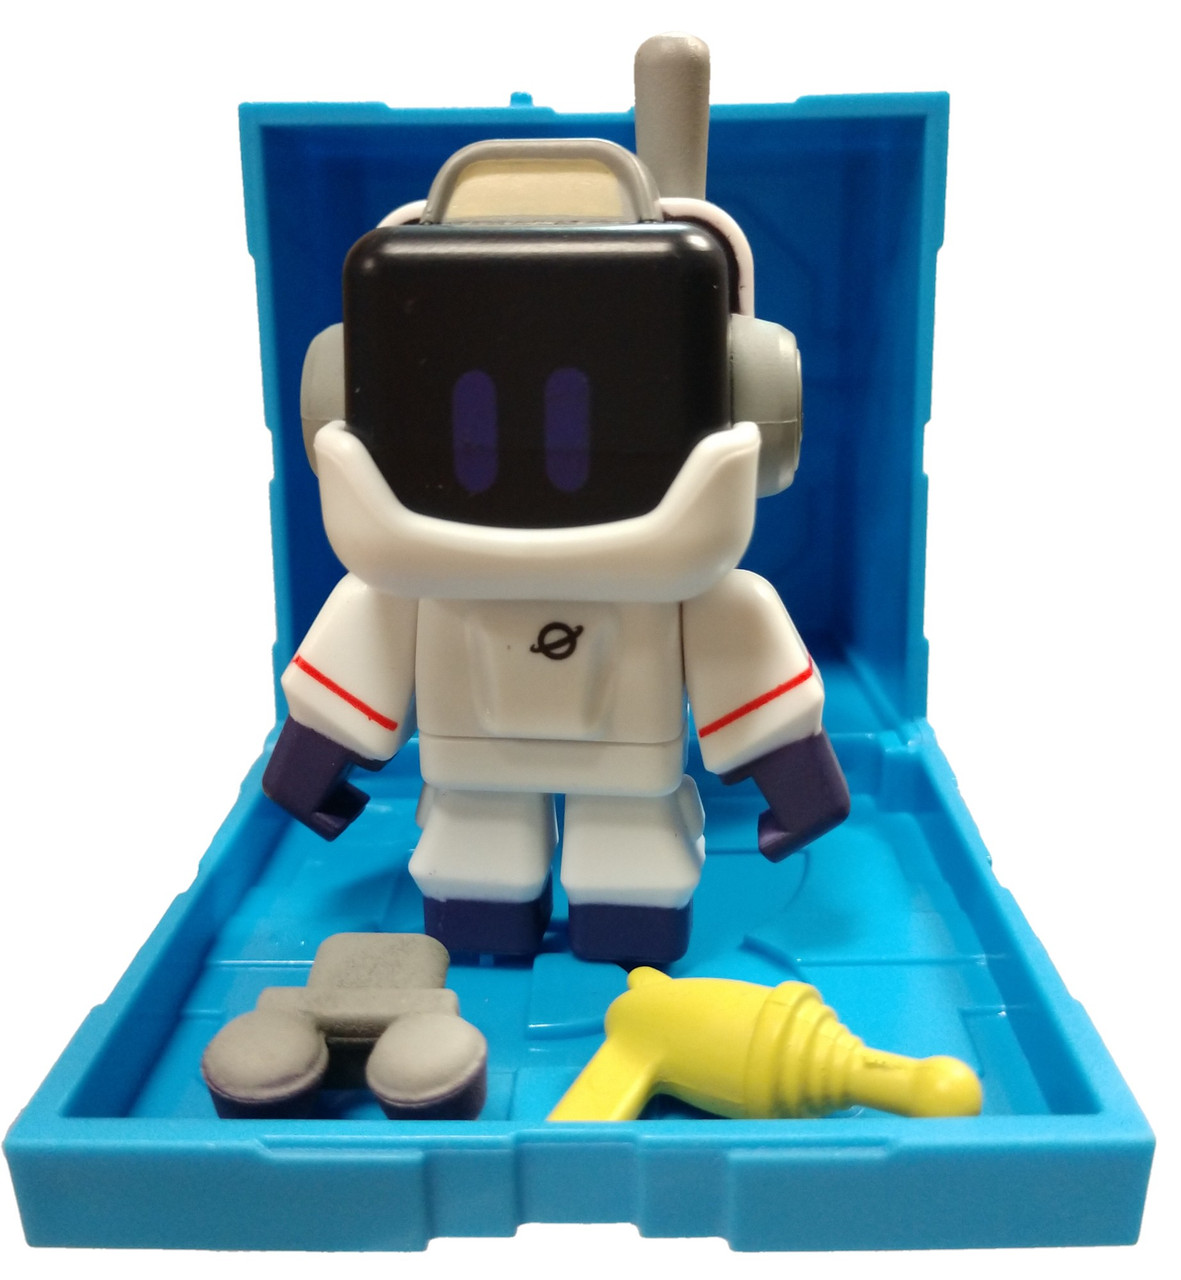 Roblox Series 9 Sharkbyte Studios Astro Minion 3 Mini Figure With Cube And Online Code Loose Jazwares Toywiz - twentytwopilots roblox toy